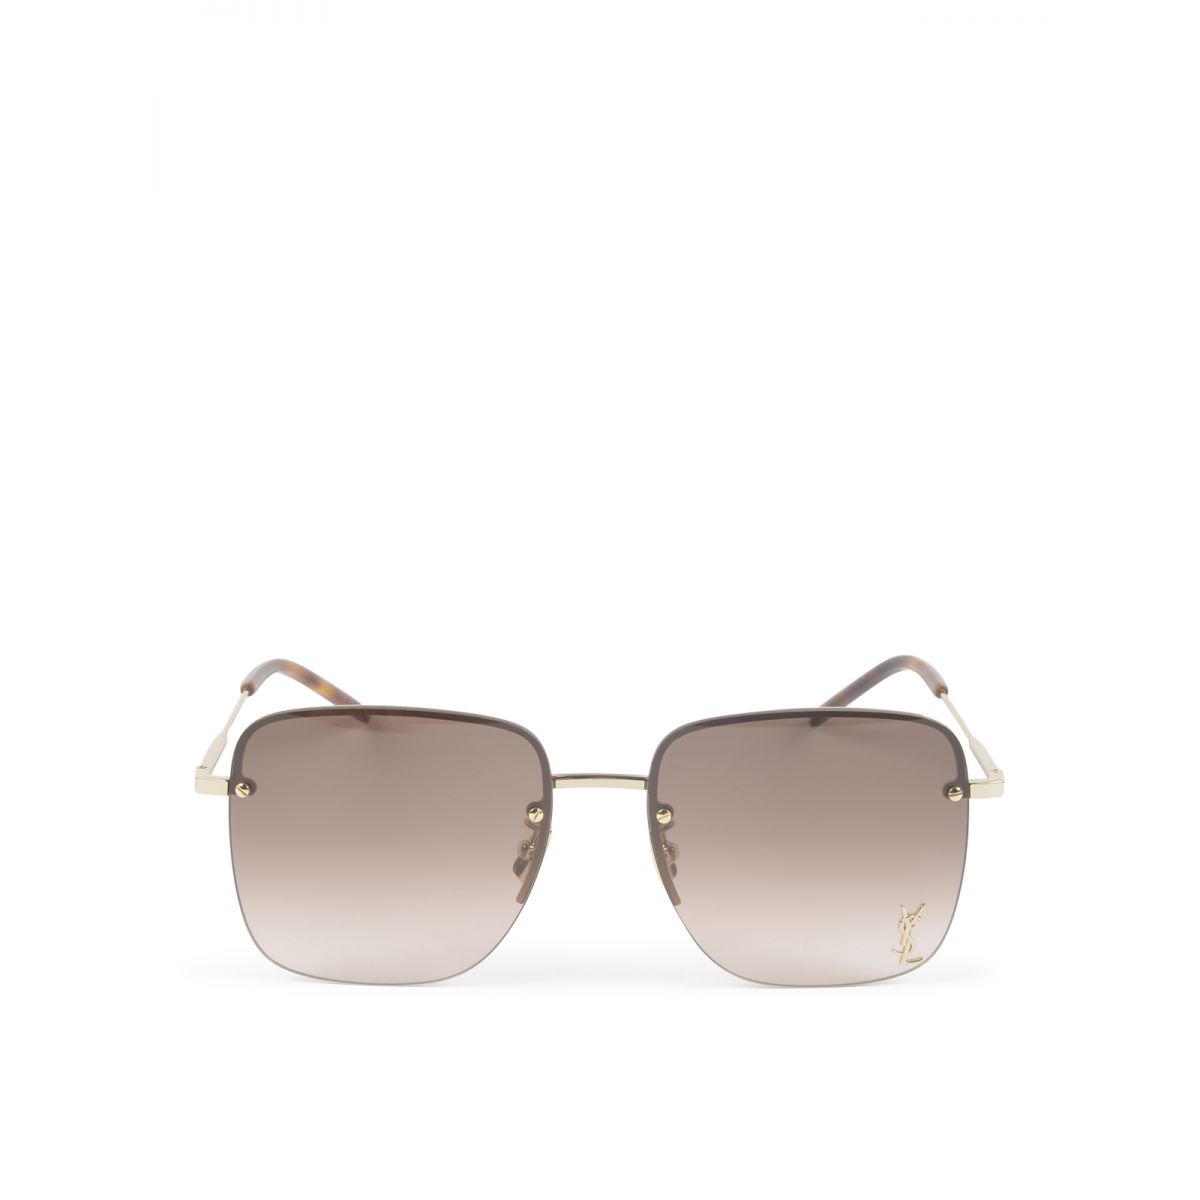 SAINT LAURENT - Saint Laurent Sunglasses with square design